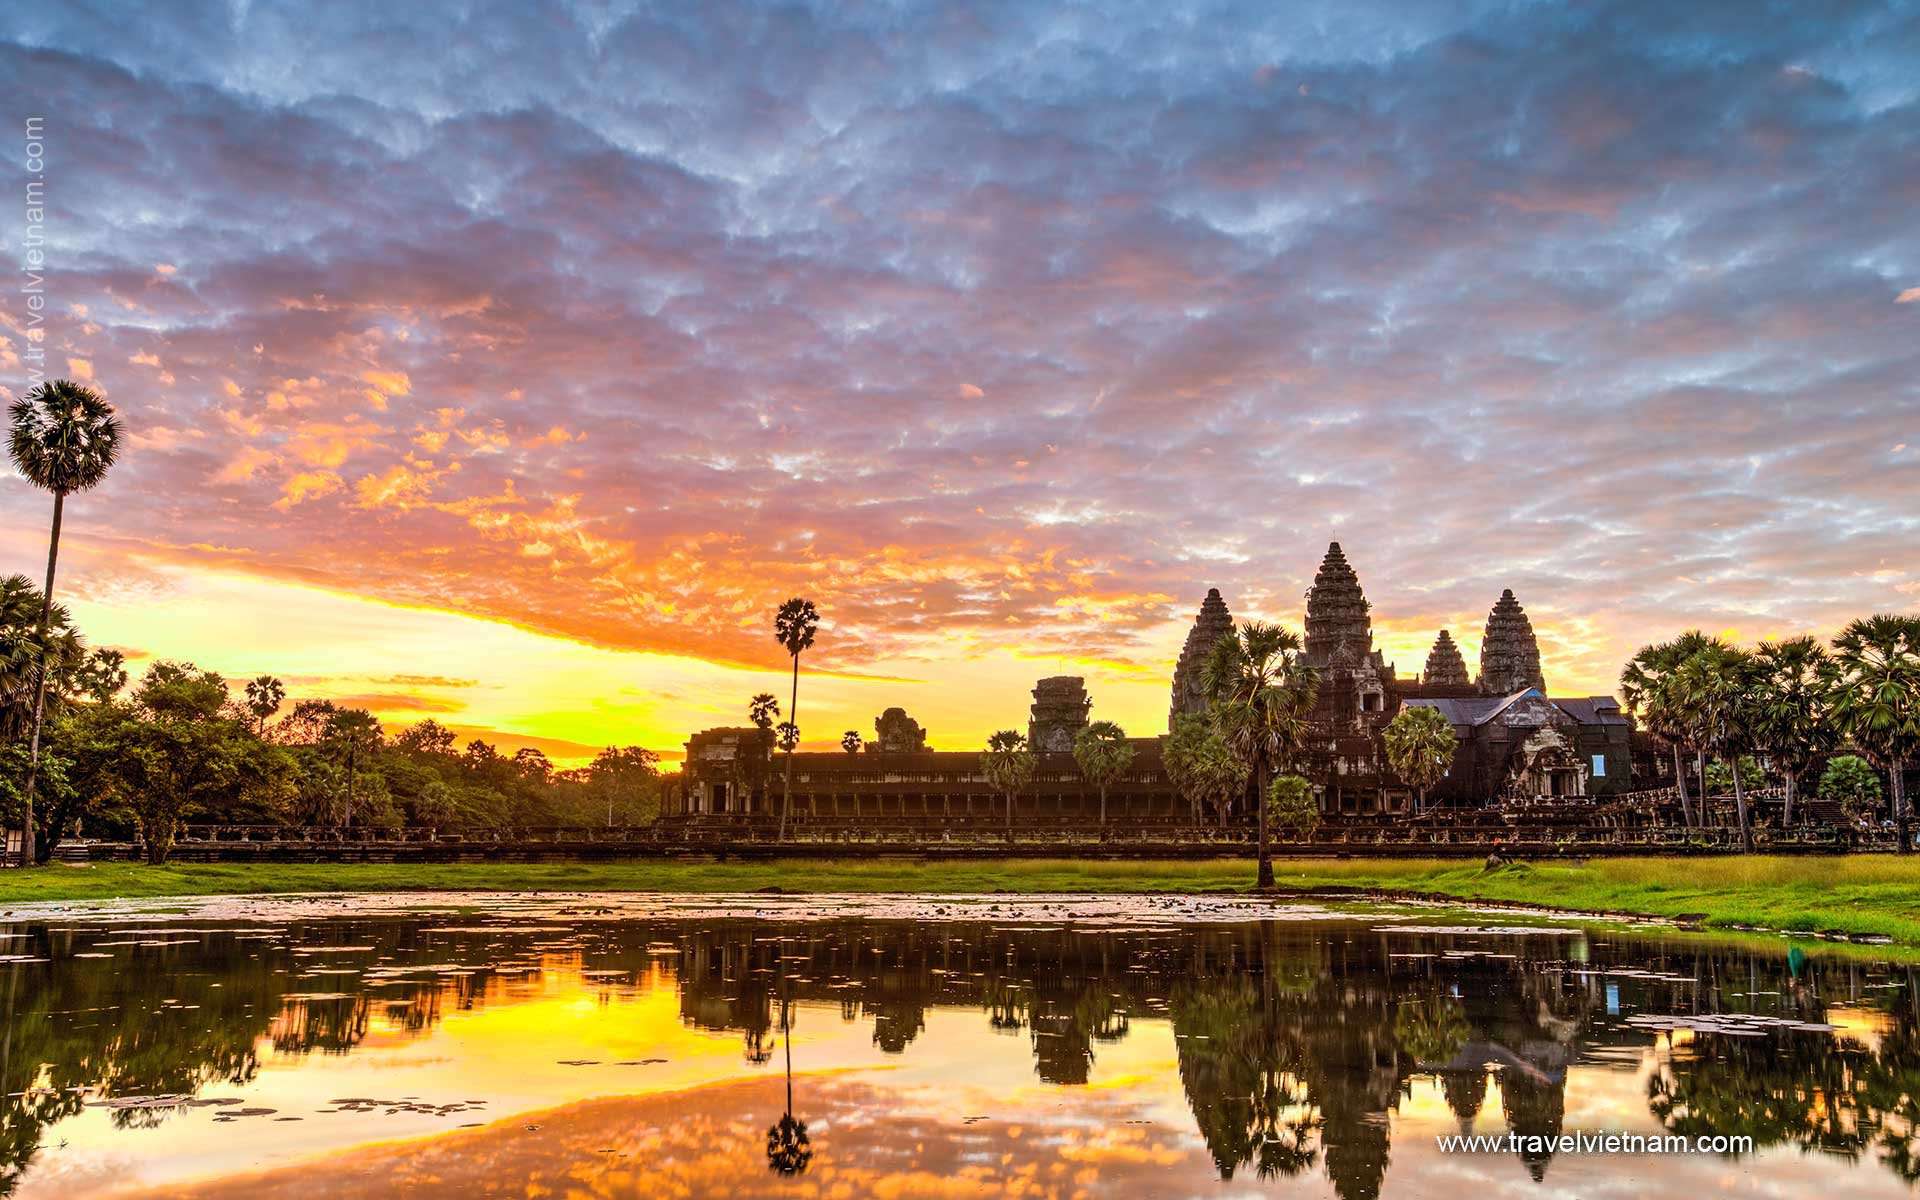 Vietnam and Angkor Temples (Cambodia) Tour - 7 Days